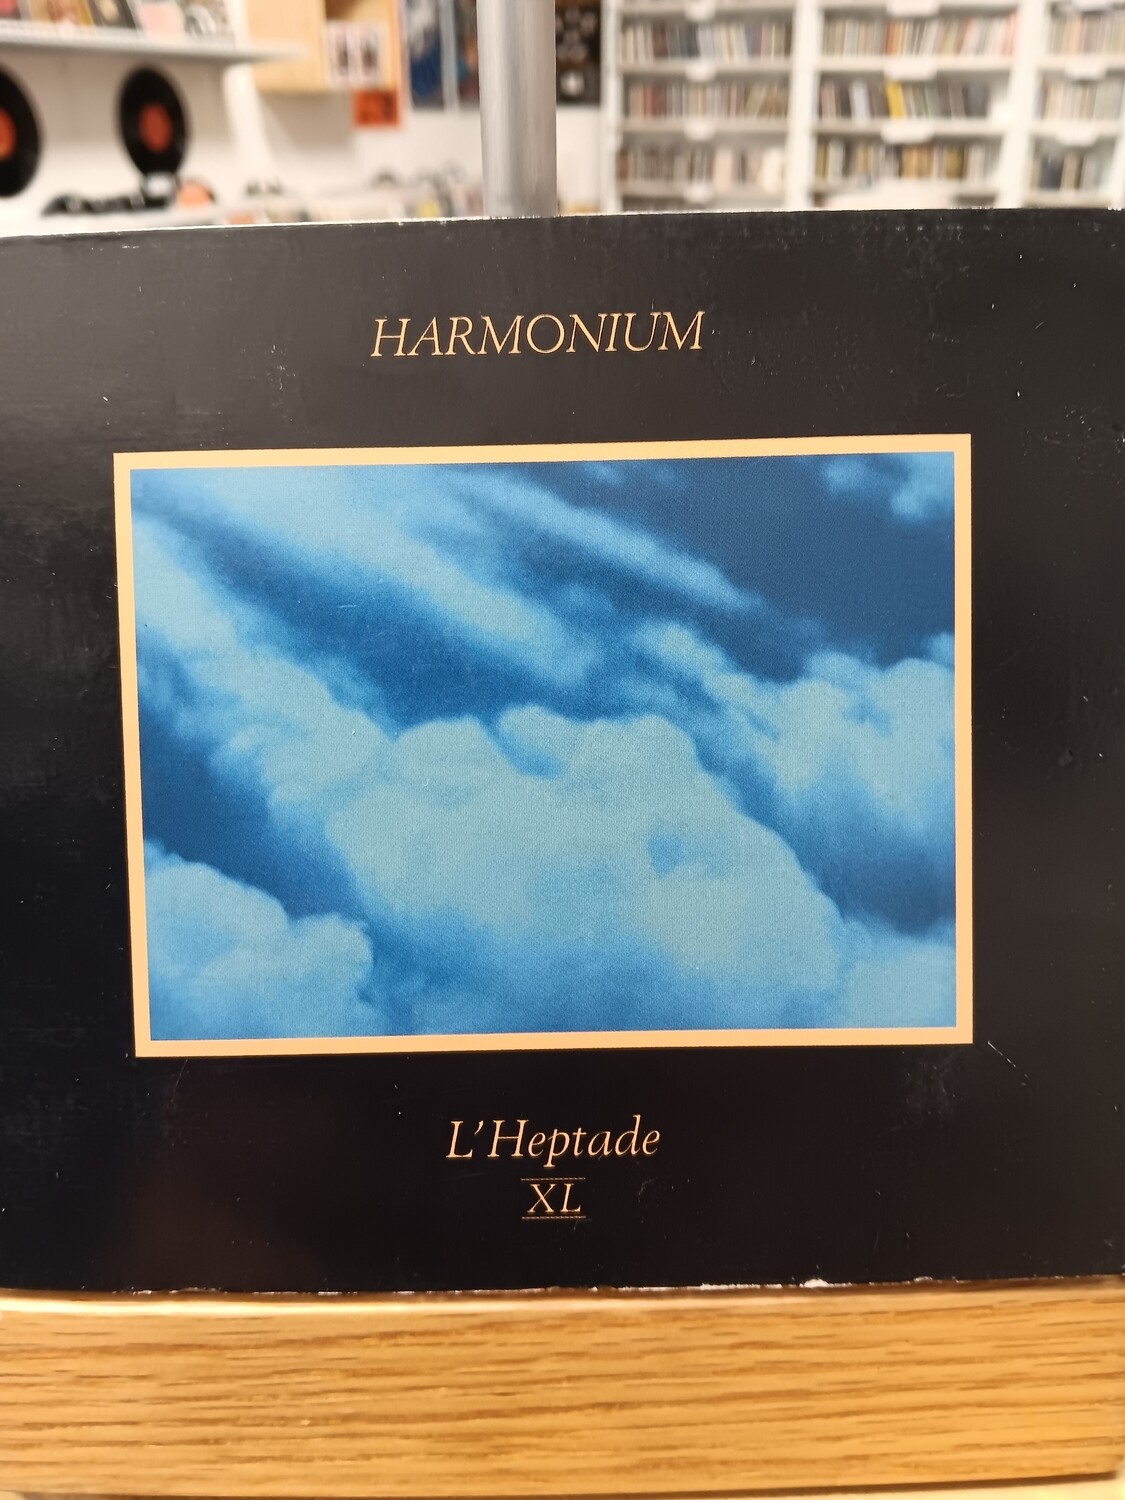 HARMONIUM - L'Heptade XL (CD)